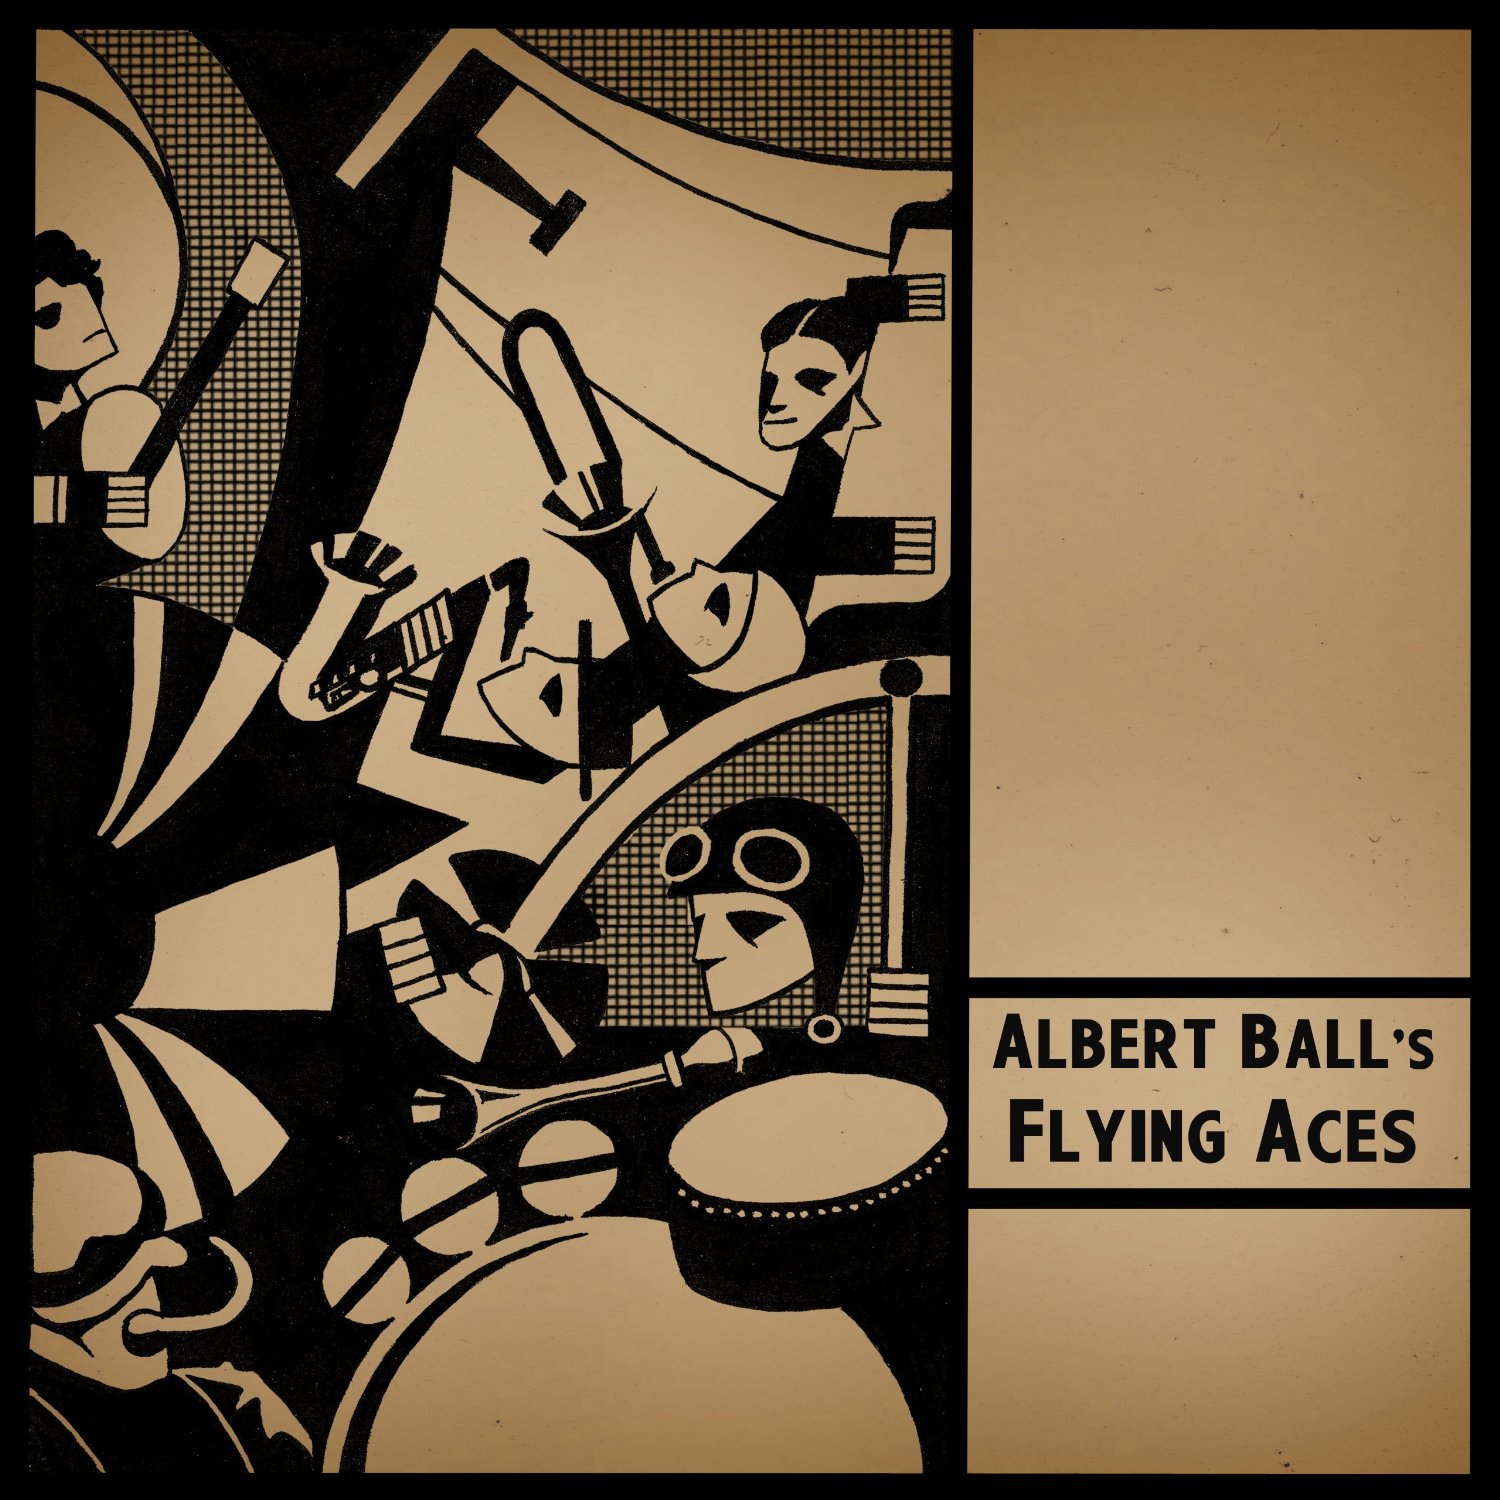 ALBERT BALL'S FLYING ACES